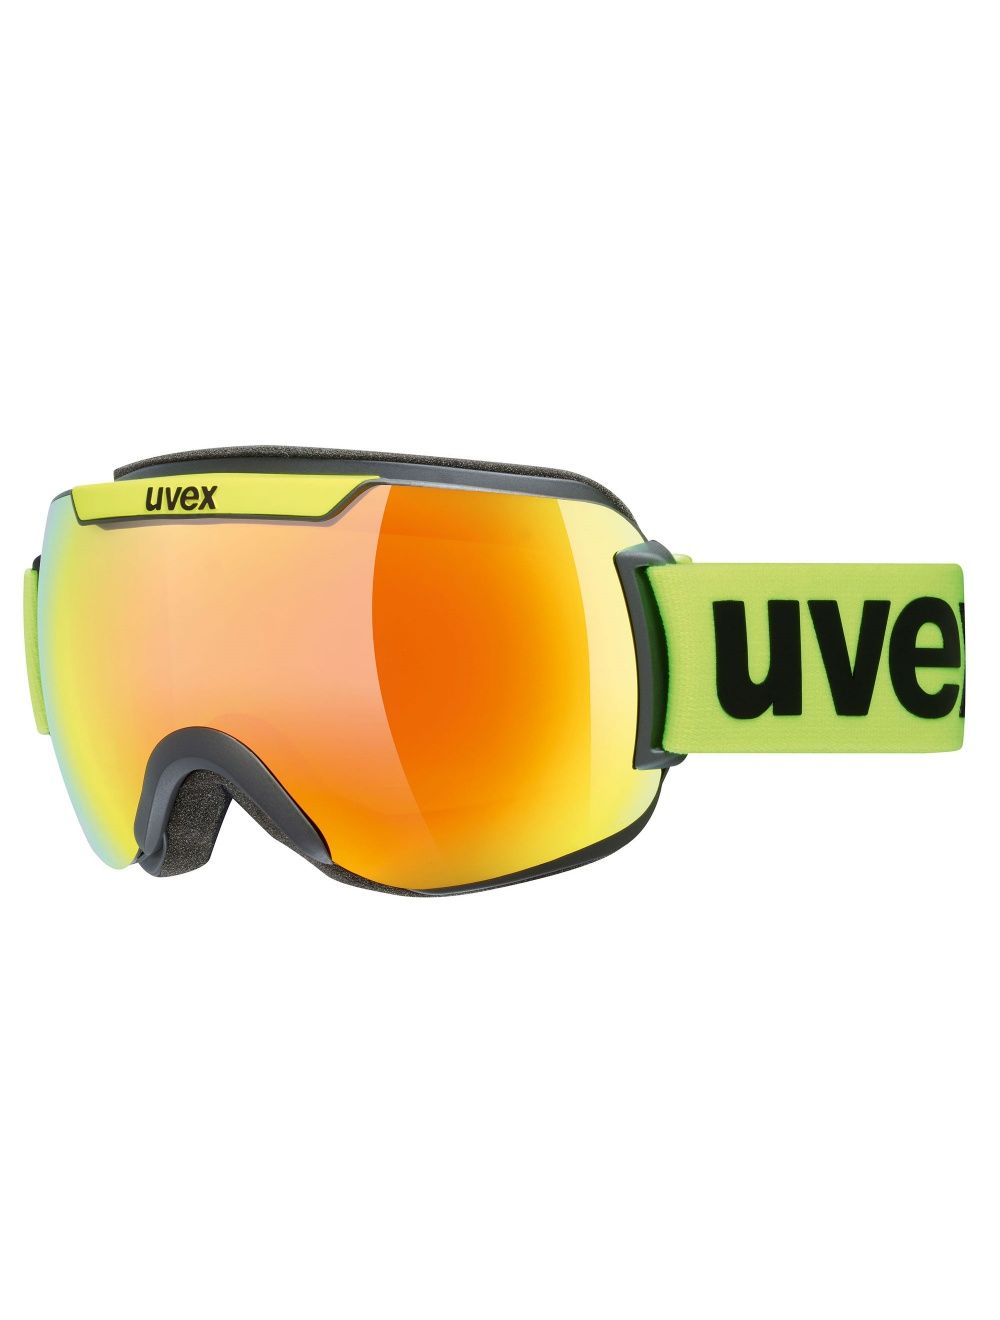 UVEX Gogle narciarskie DOWNHILL 2000 CV 3030 yellow lime/orange green